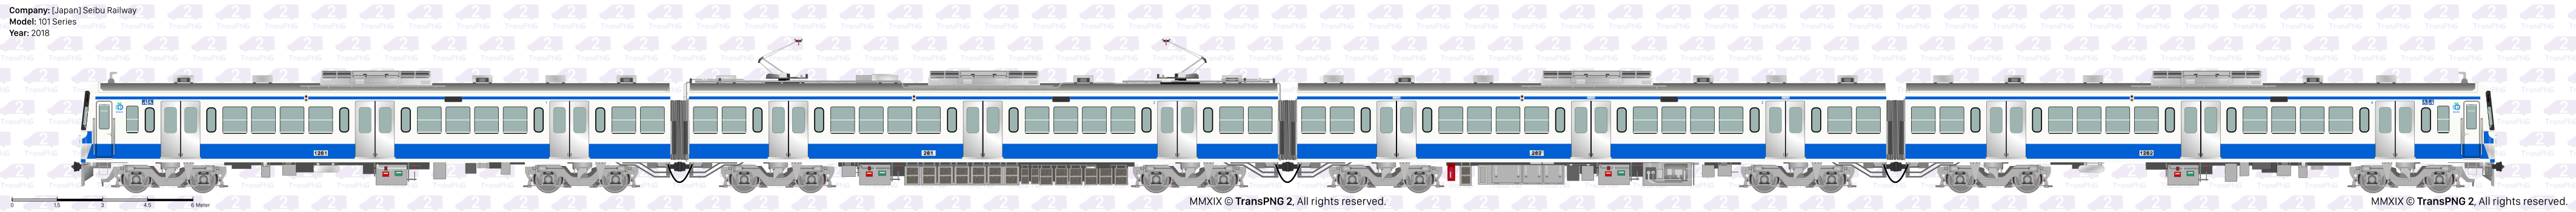 24011 - [24011] Seibu Railway 48142935092_2d87deb35b_o